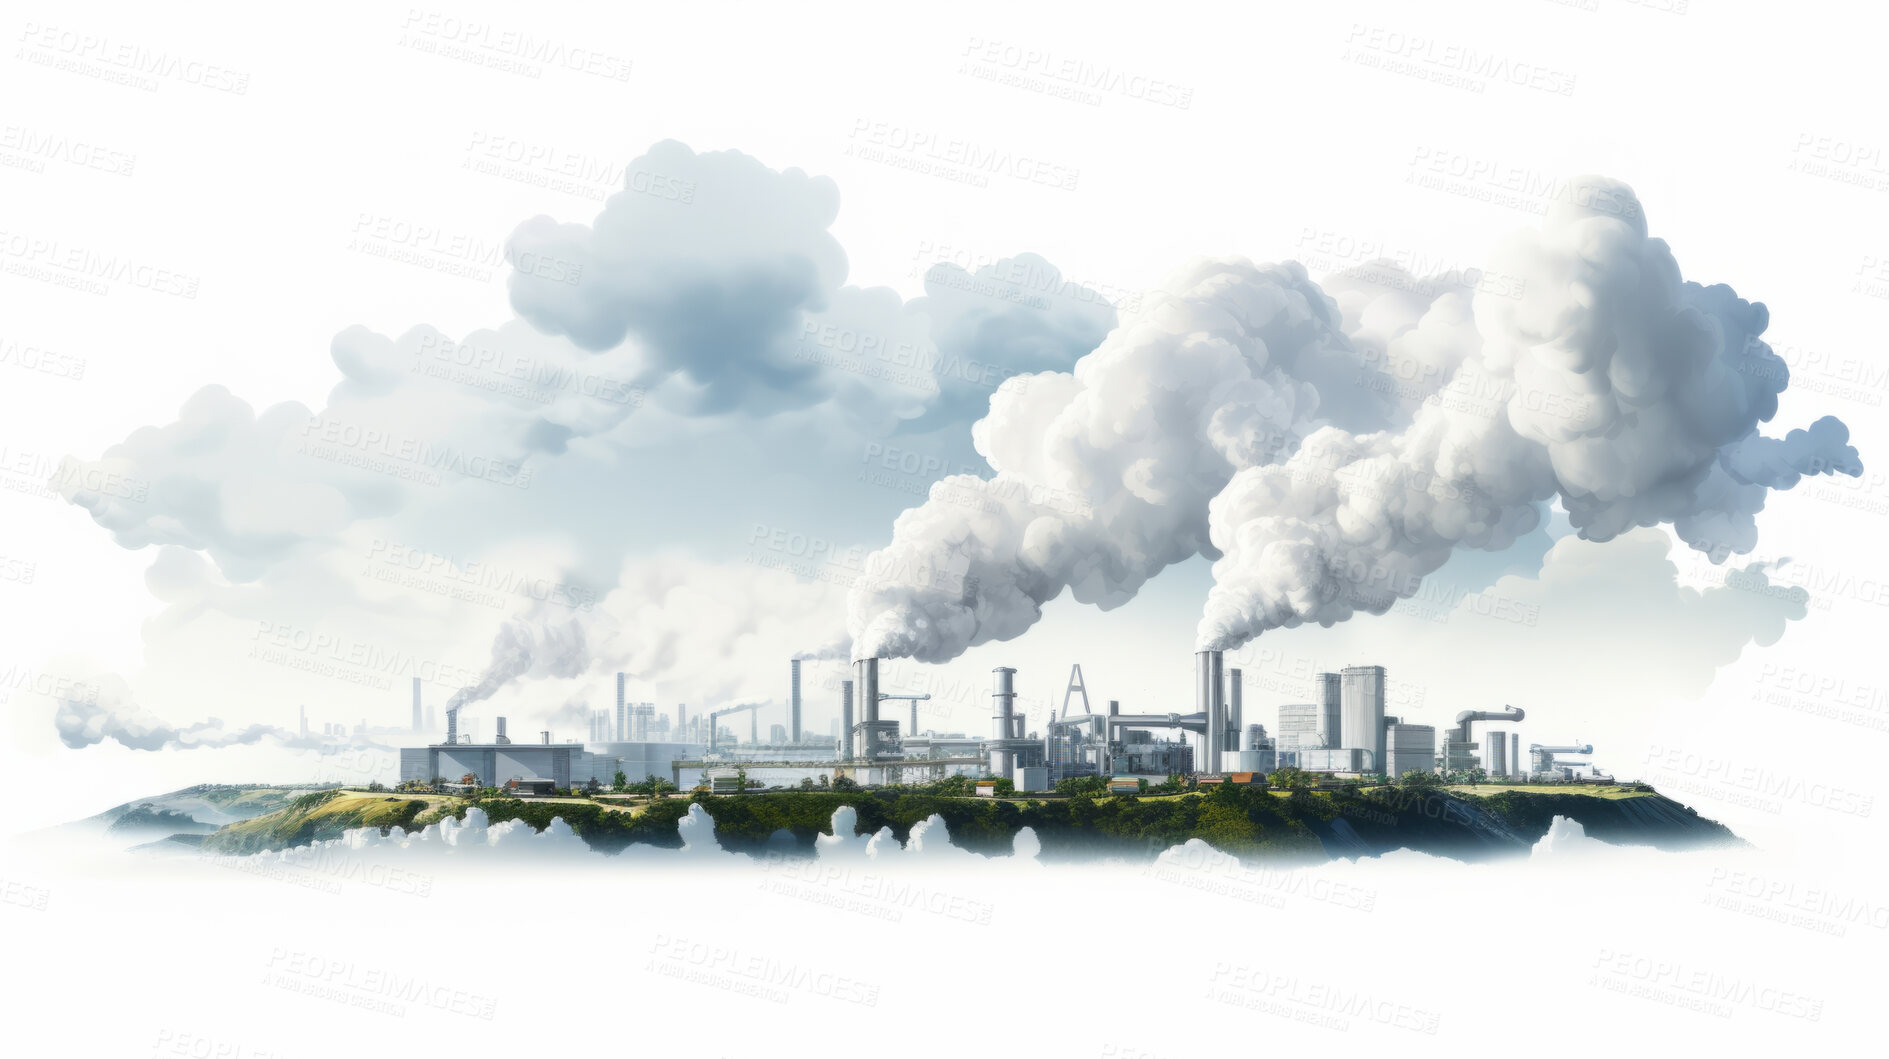 Buy stock photo Environmental pollution, factory or fuel power plant smoke emission. Environmental crisis